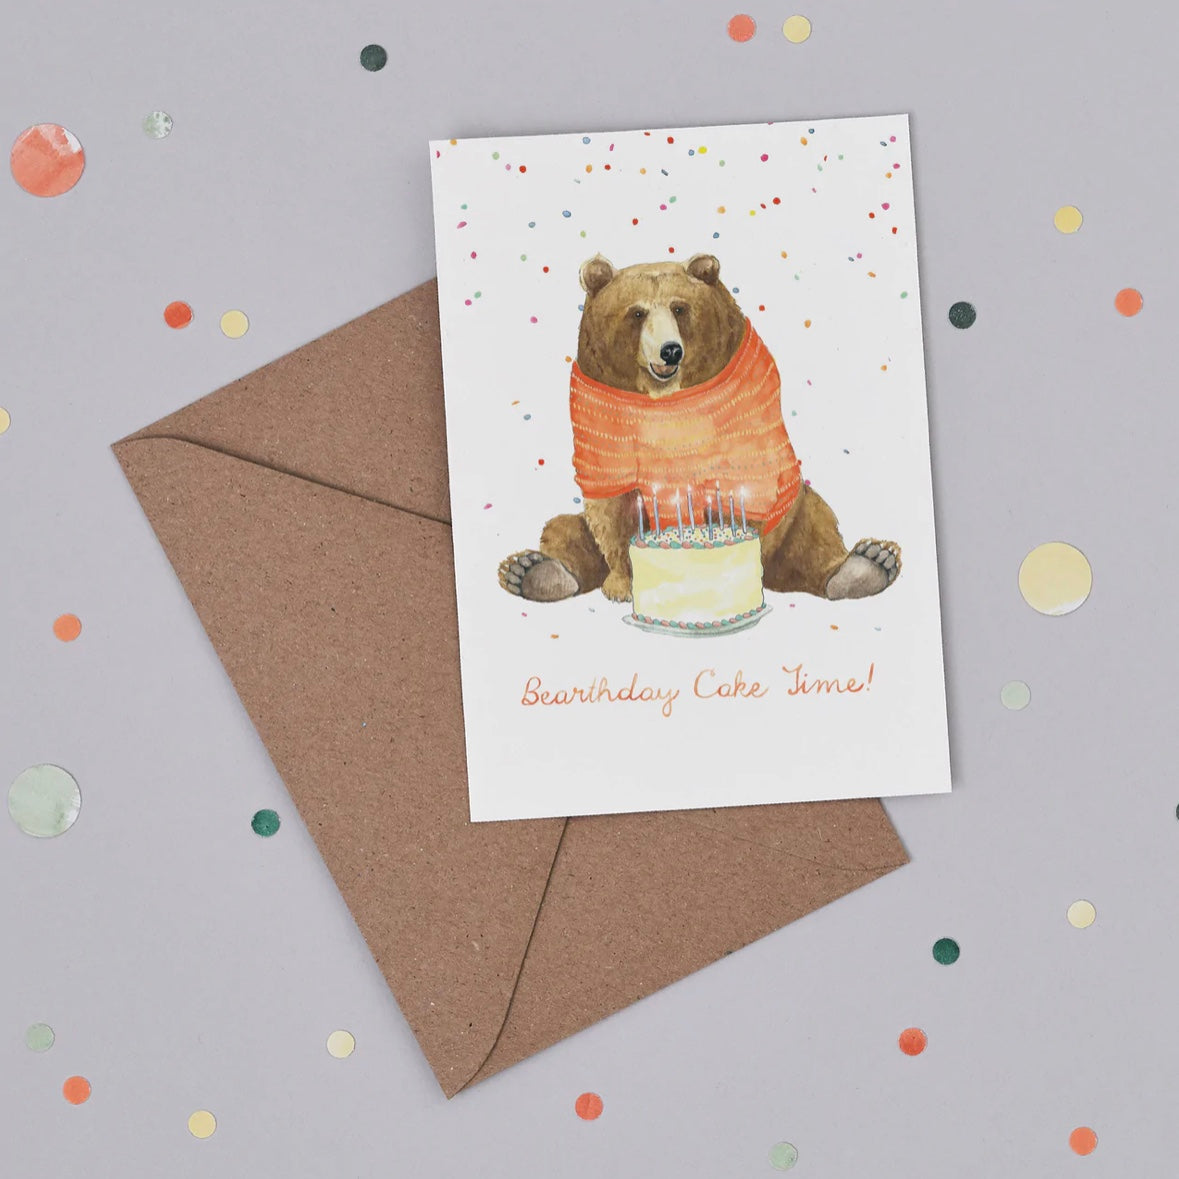 Bearthday Cake Time Greetings Card